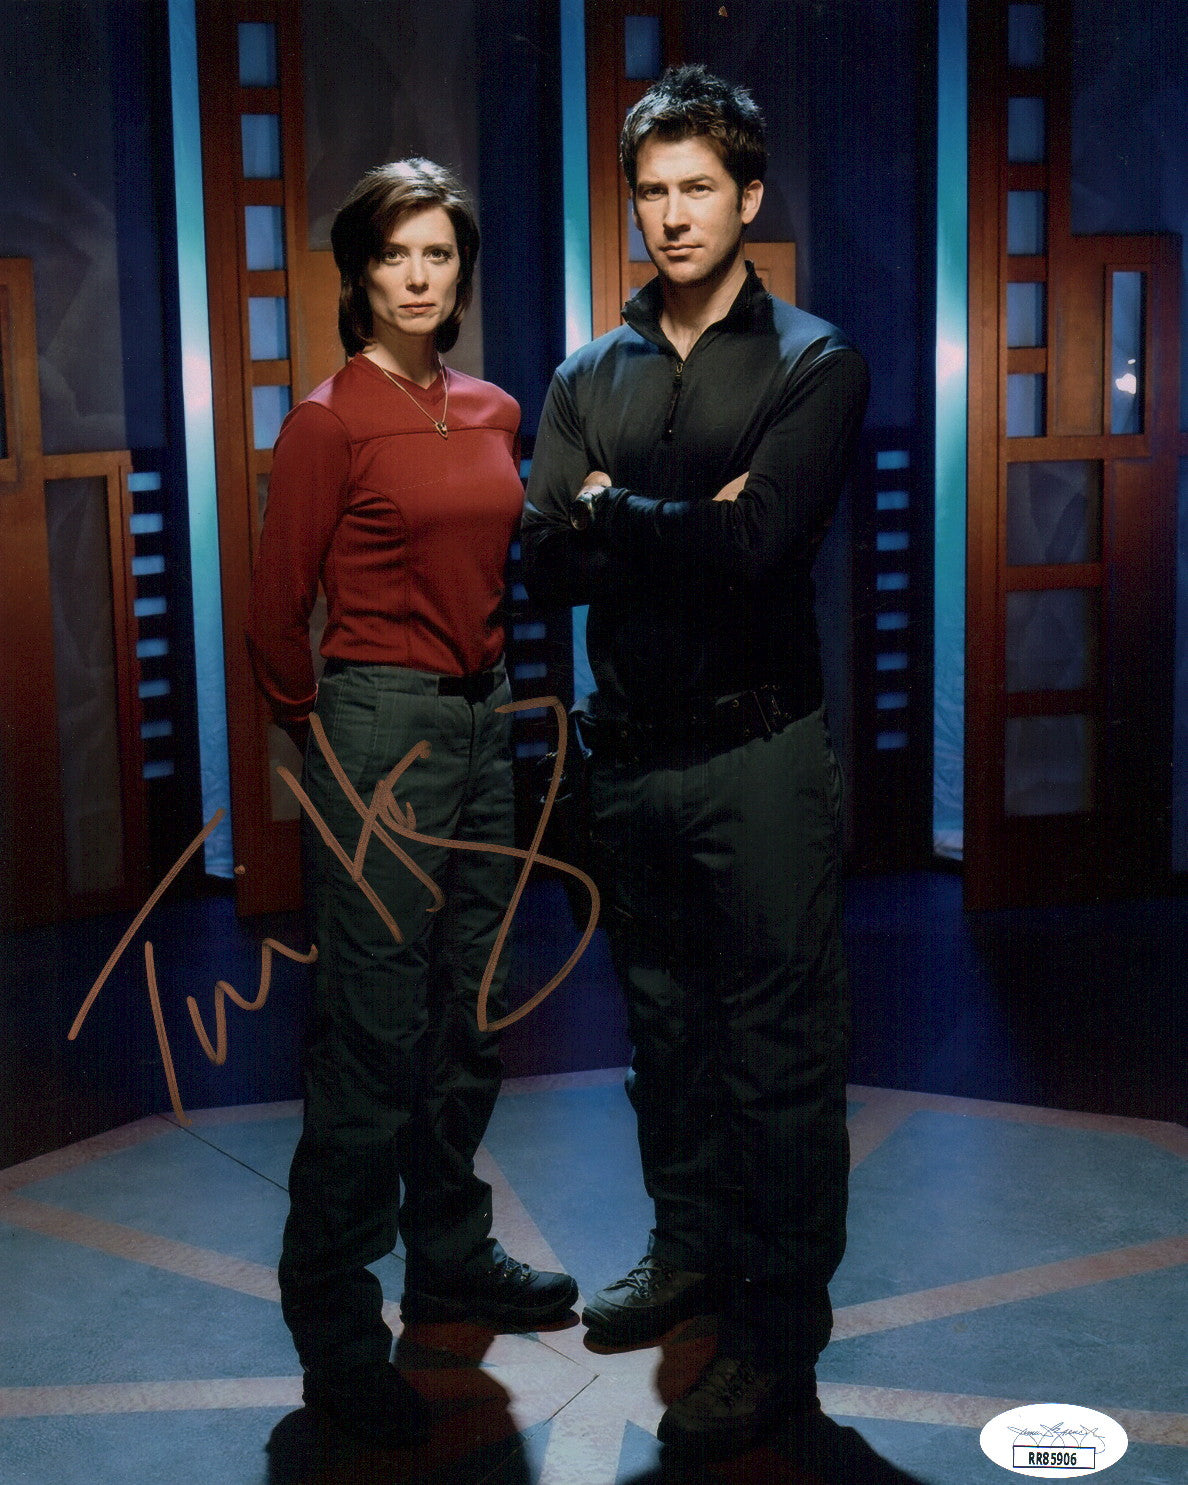 Torri Higginson Stargate Atlantis 8x10 Signed Photo JSA COA Certified Autograph